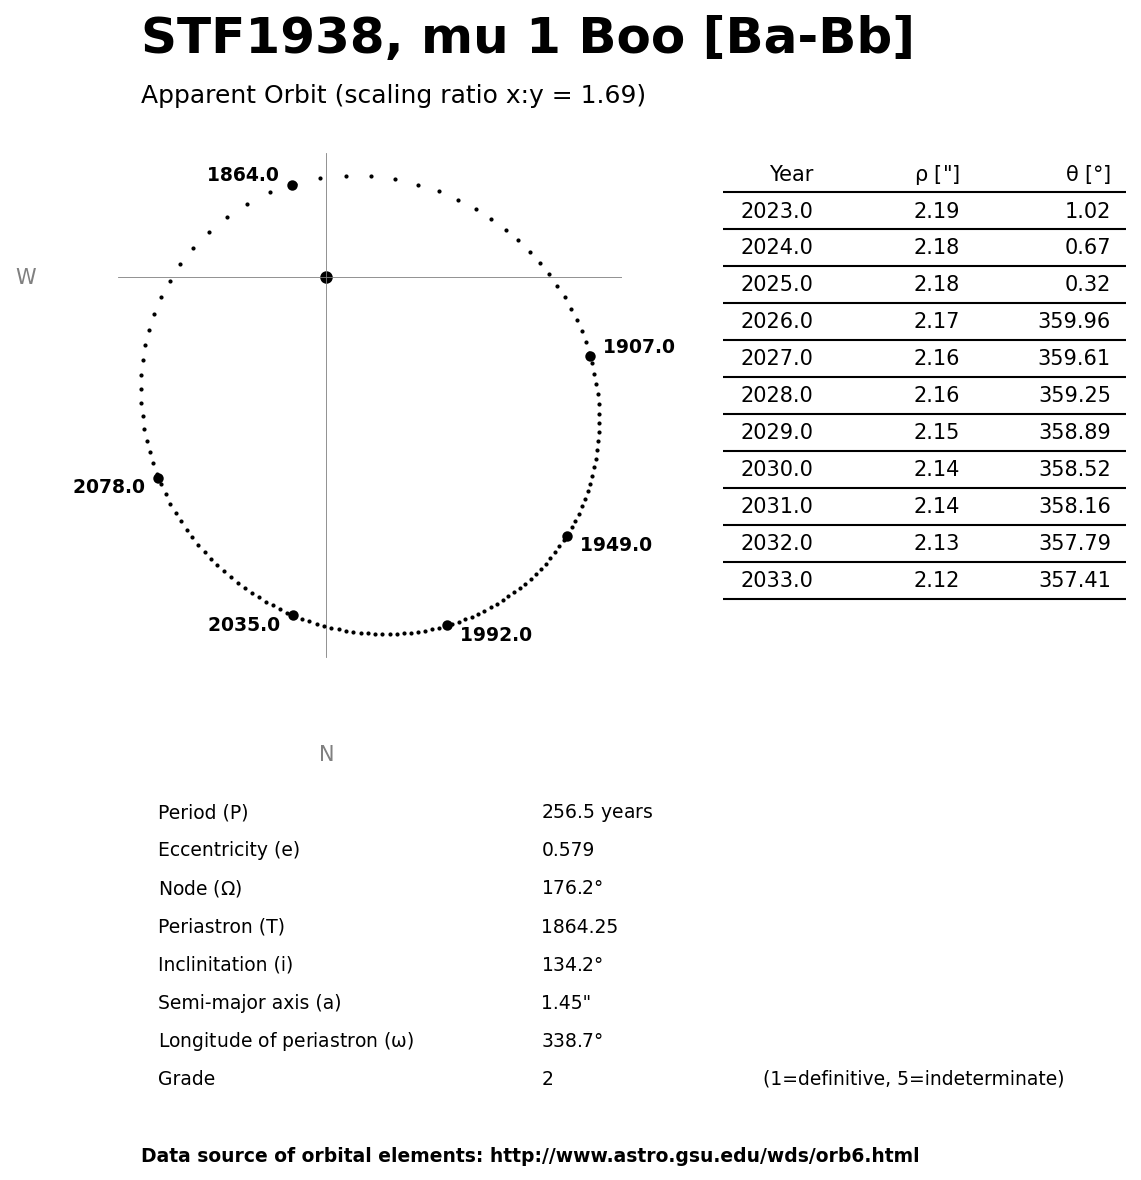 ../images/binary-star-orbits/STF1938-Ba-Bb-orbit.jpg